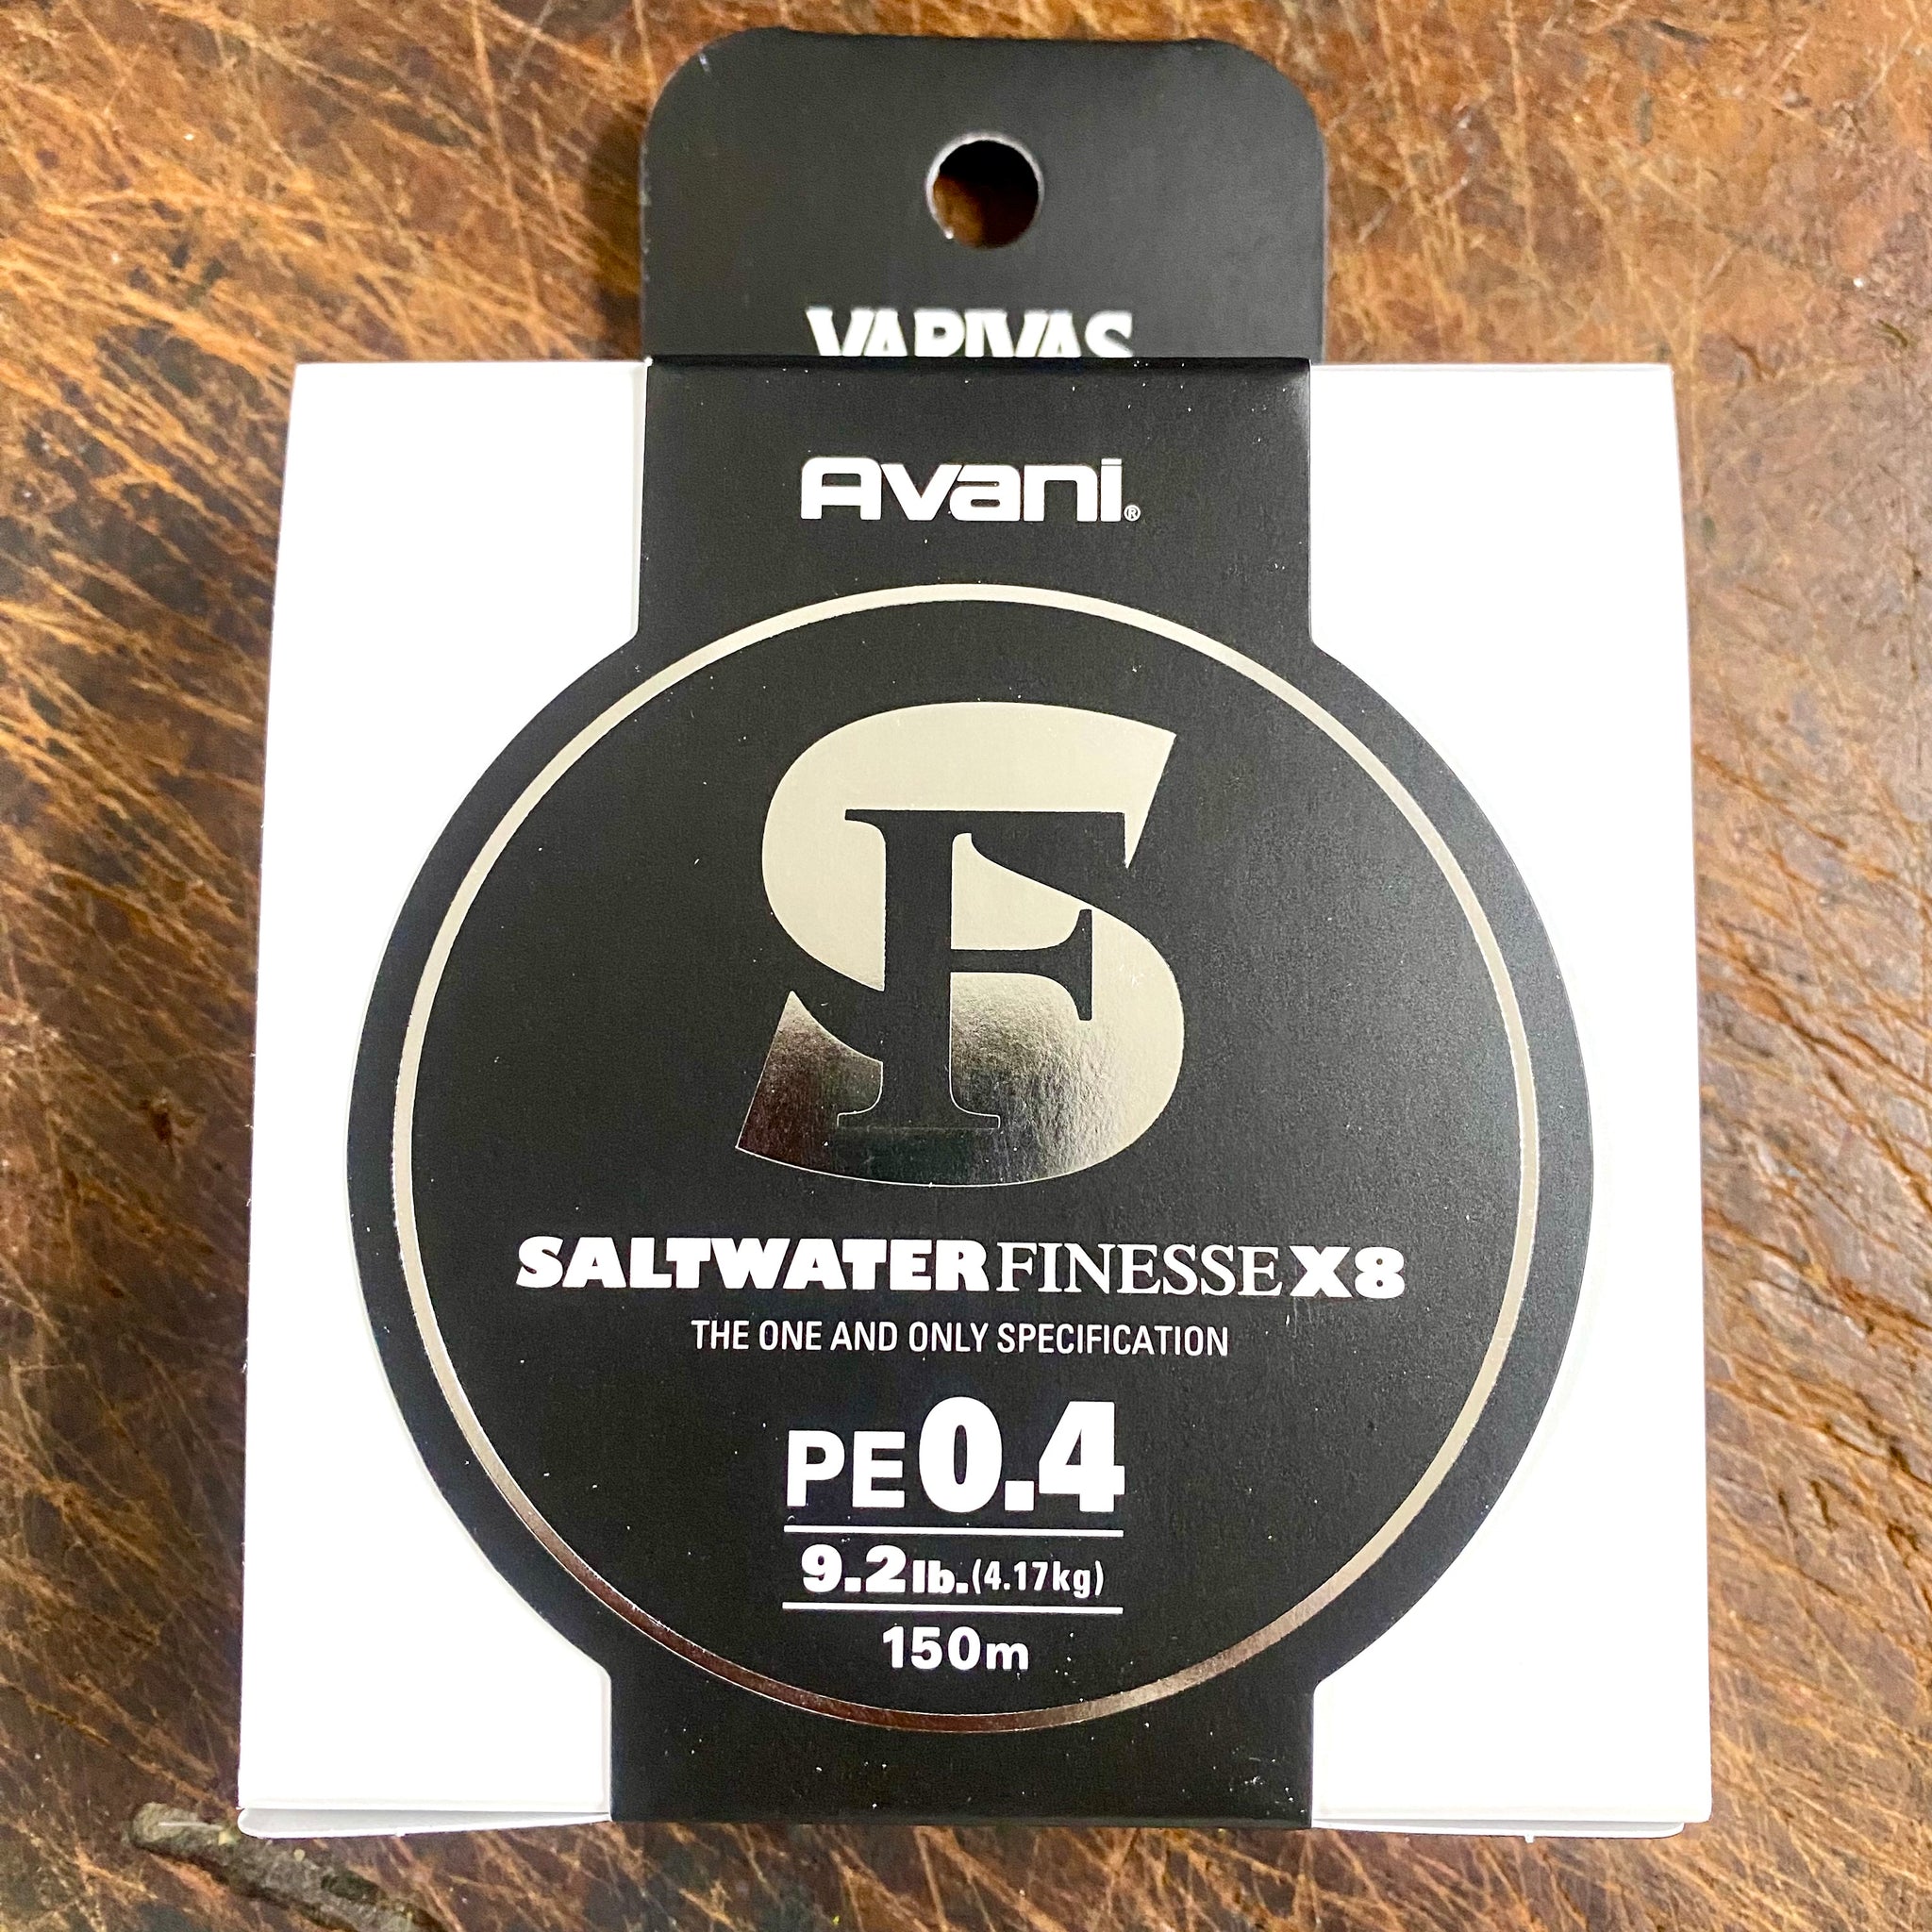 Varivas Avani Saltwater Finesse X8 PE0.4 9.2lb 150m - Compleat